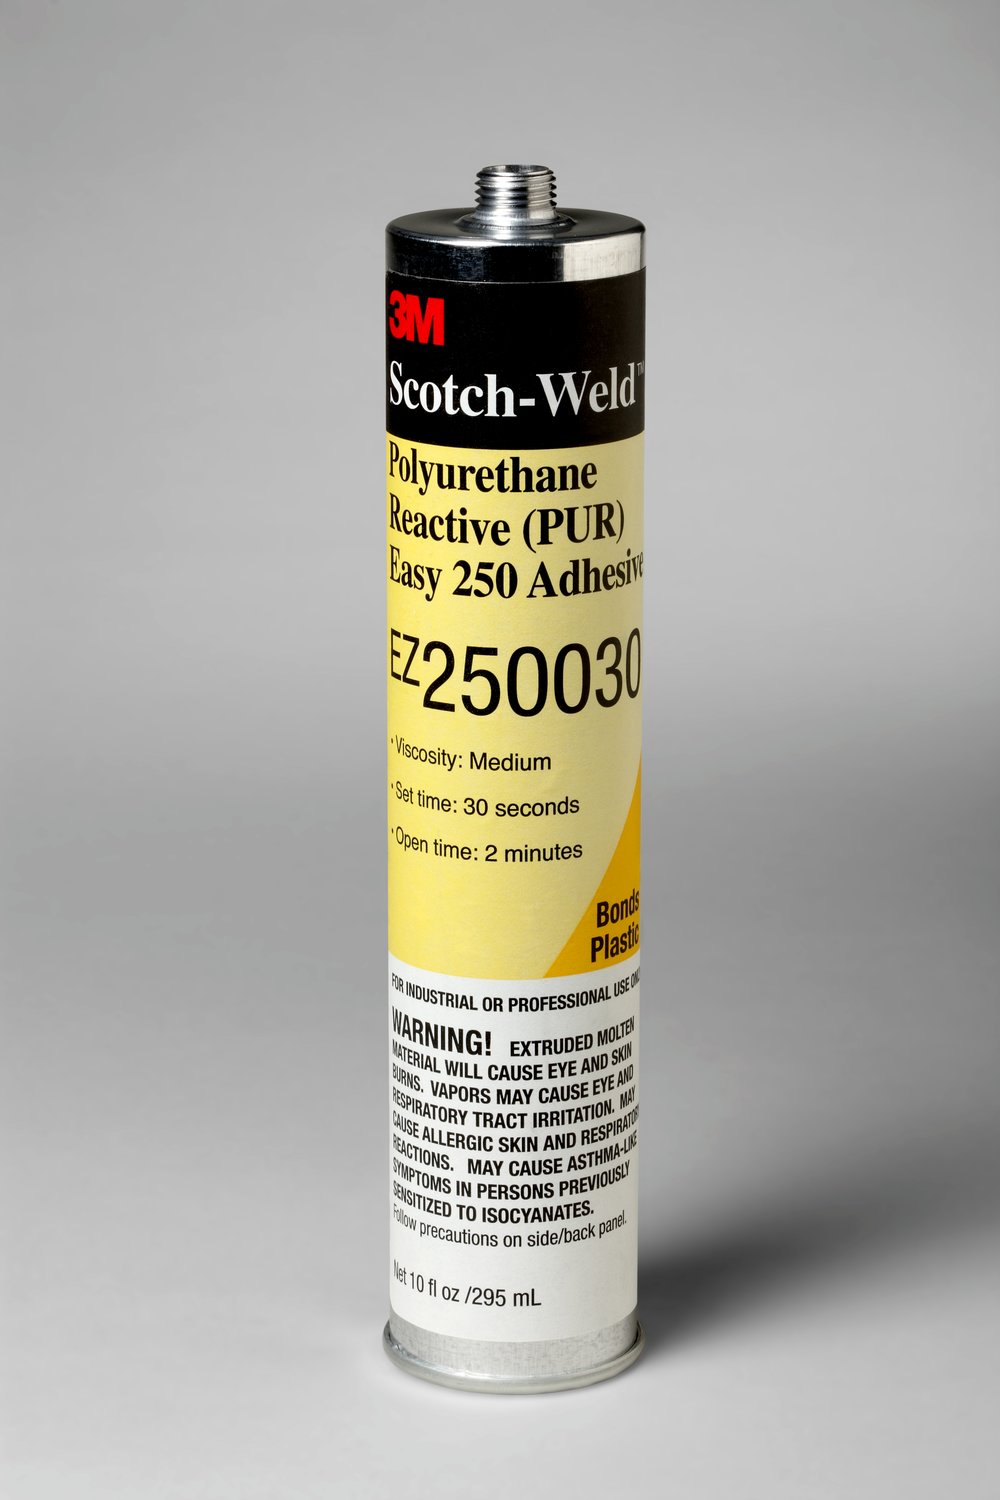 7000046530 - 3M Scotch-Weld PUR Adhesive EZ250030, Off-White, 1/10 Gallon Cartidge,
5 Each/Case